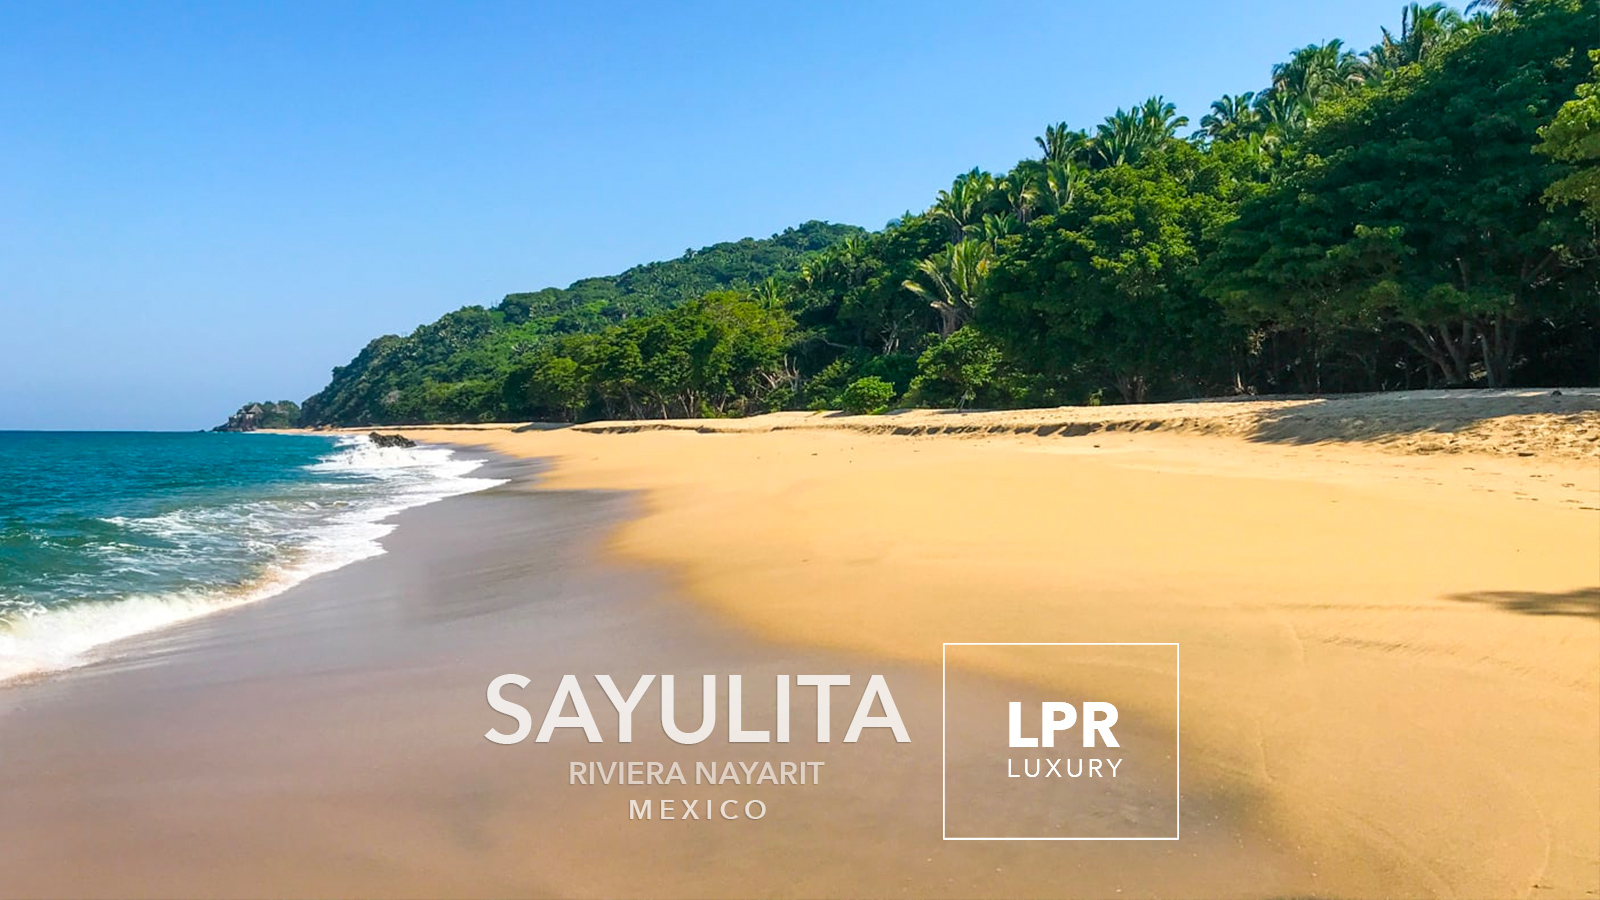 Las Brisas Sayulita - Development land - Riviera Nayarit, Mexico